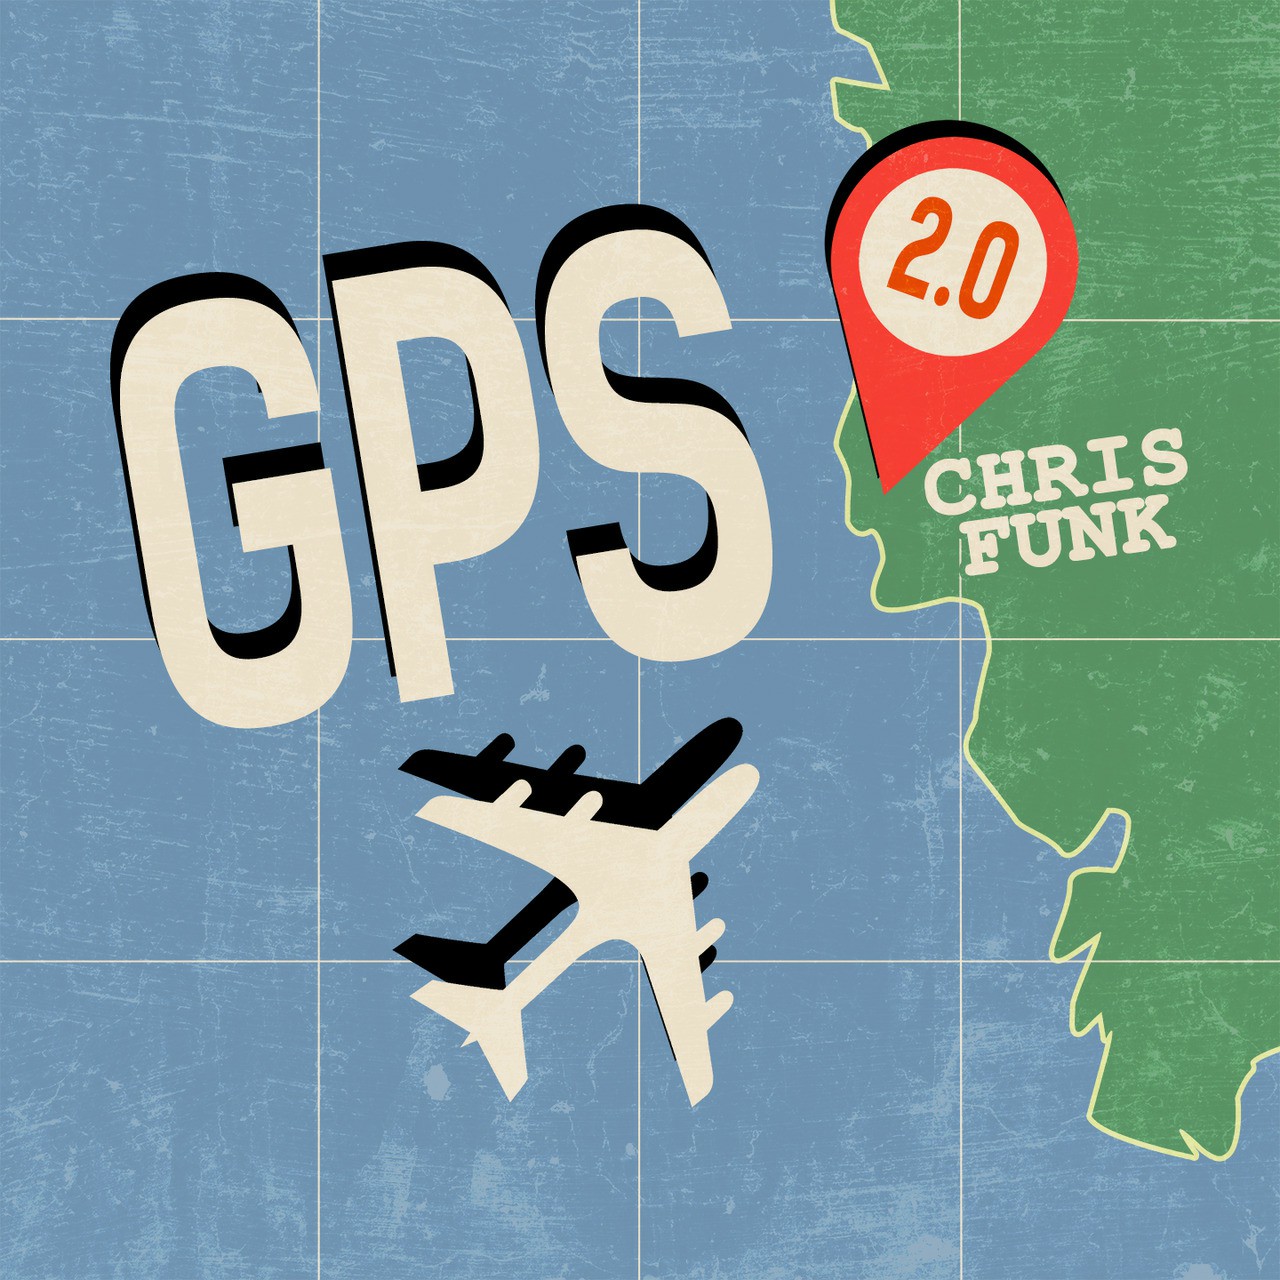 Chris Funk - GPS 2.0